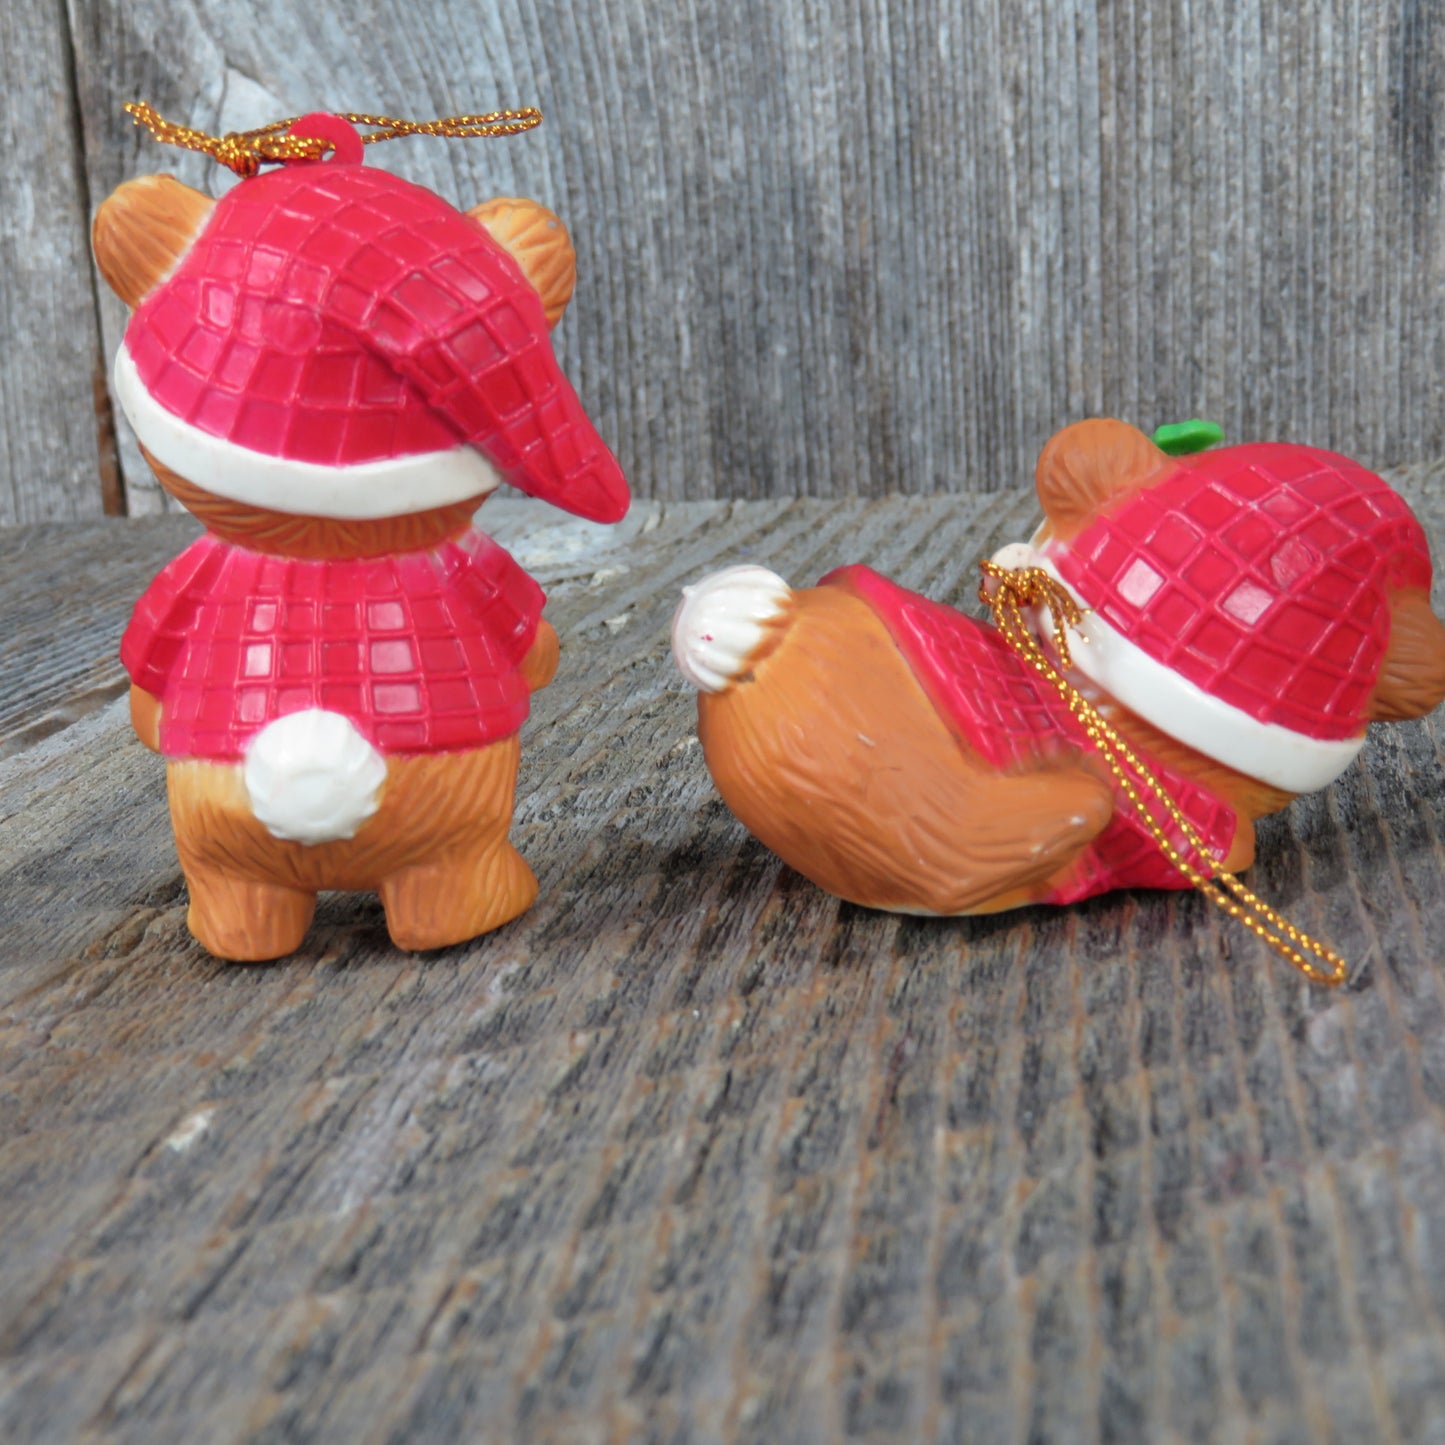 Vintage Teddy Bear Ornament Set Plastic Christmas Red Suit Pajamas Santa Hats Holly Leaves - At Grandma's Table